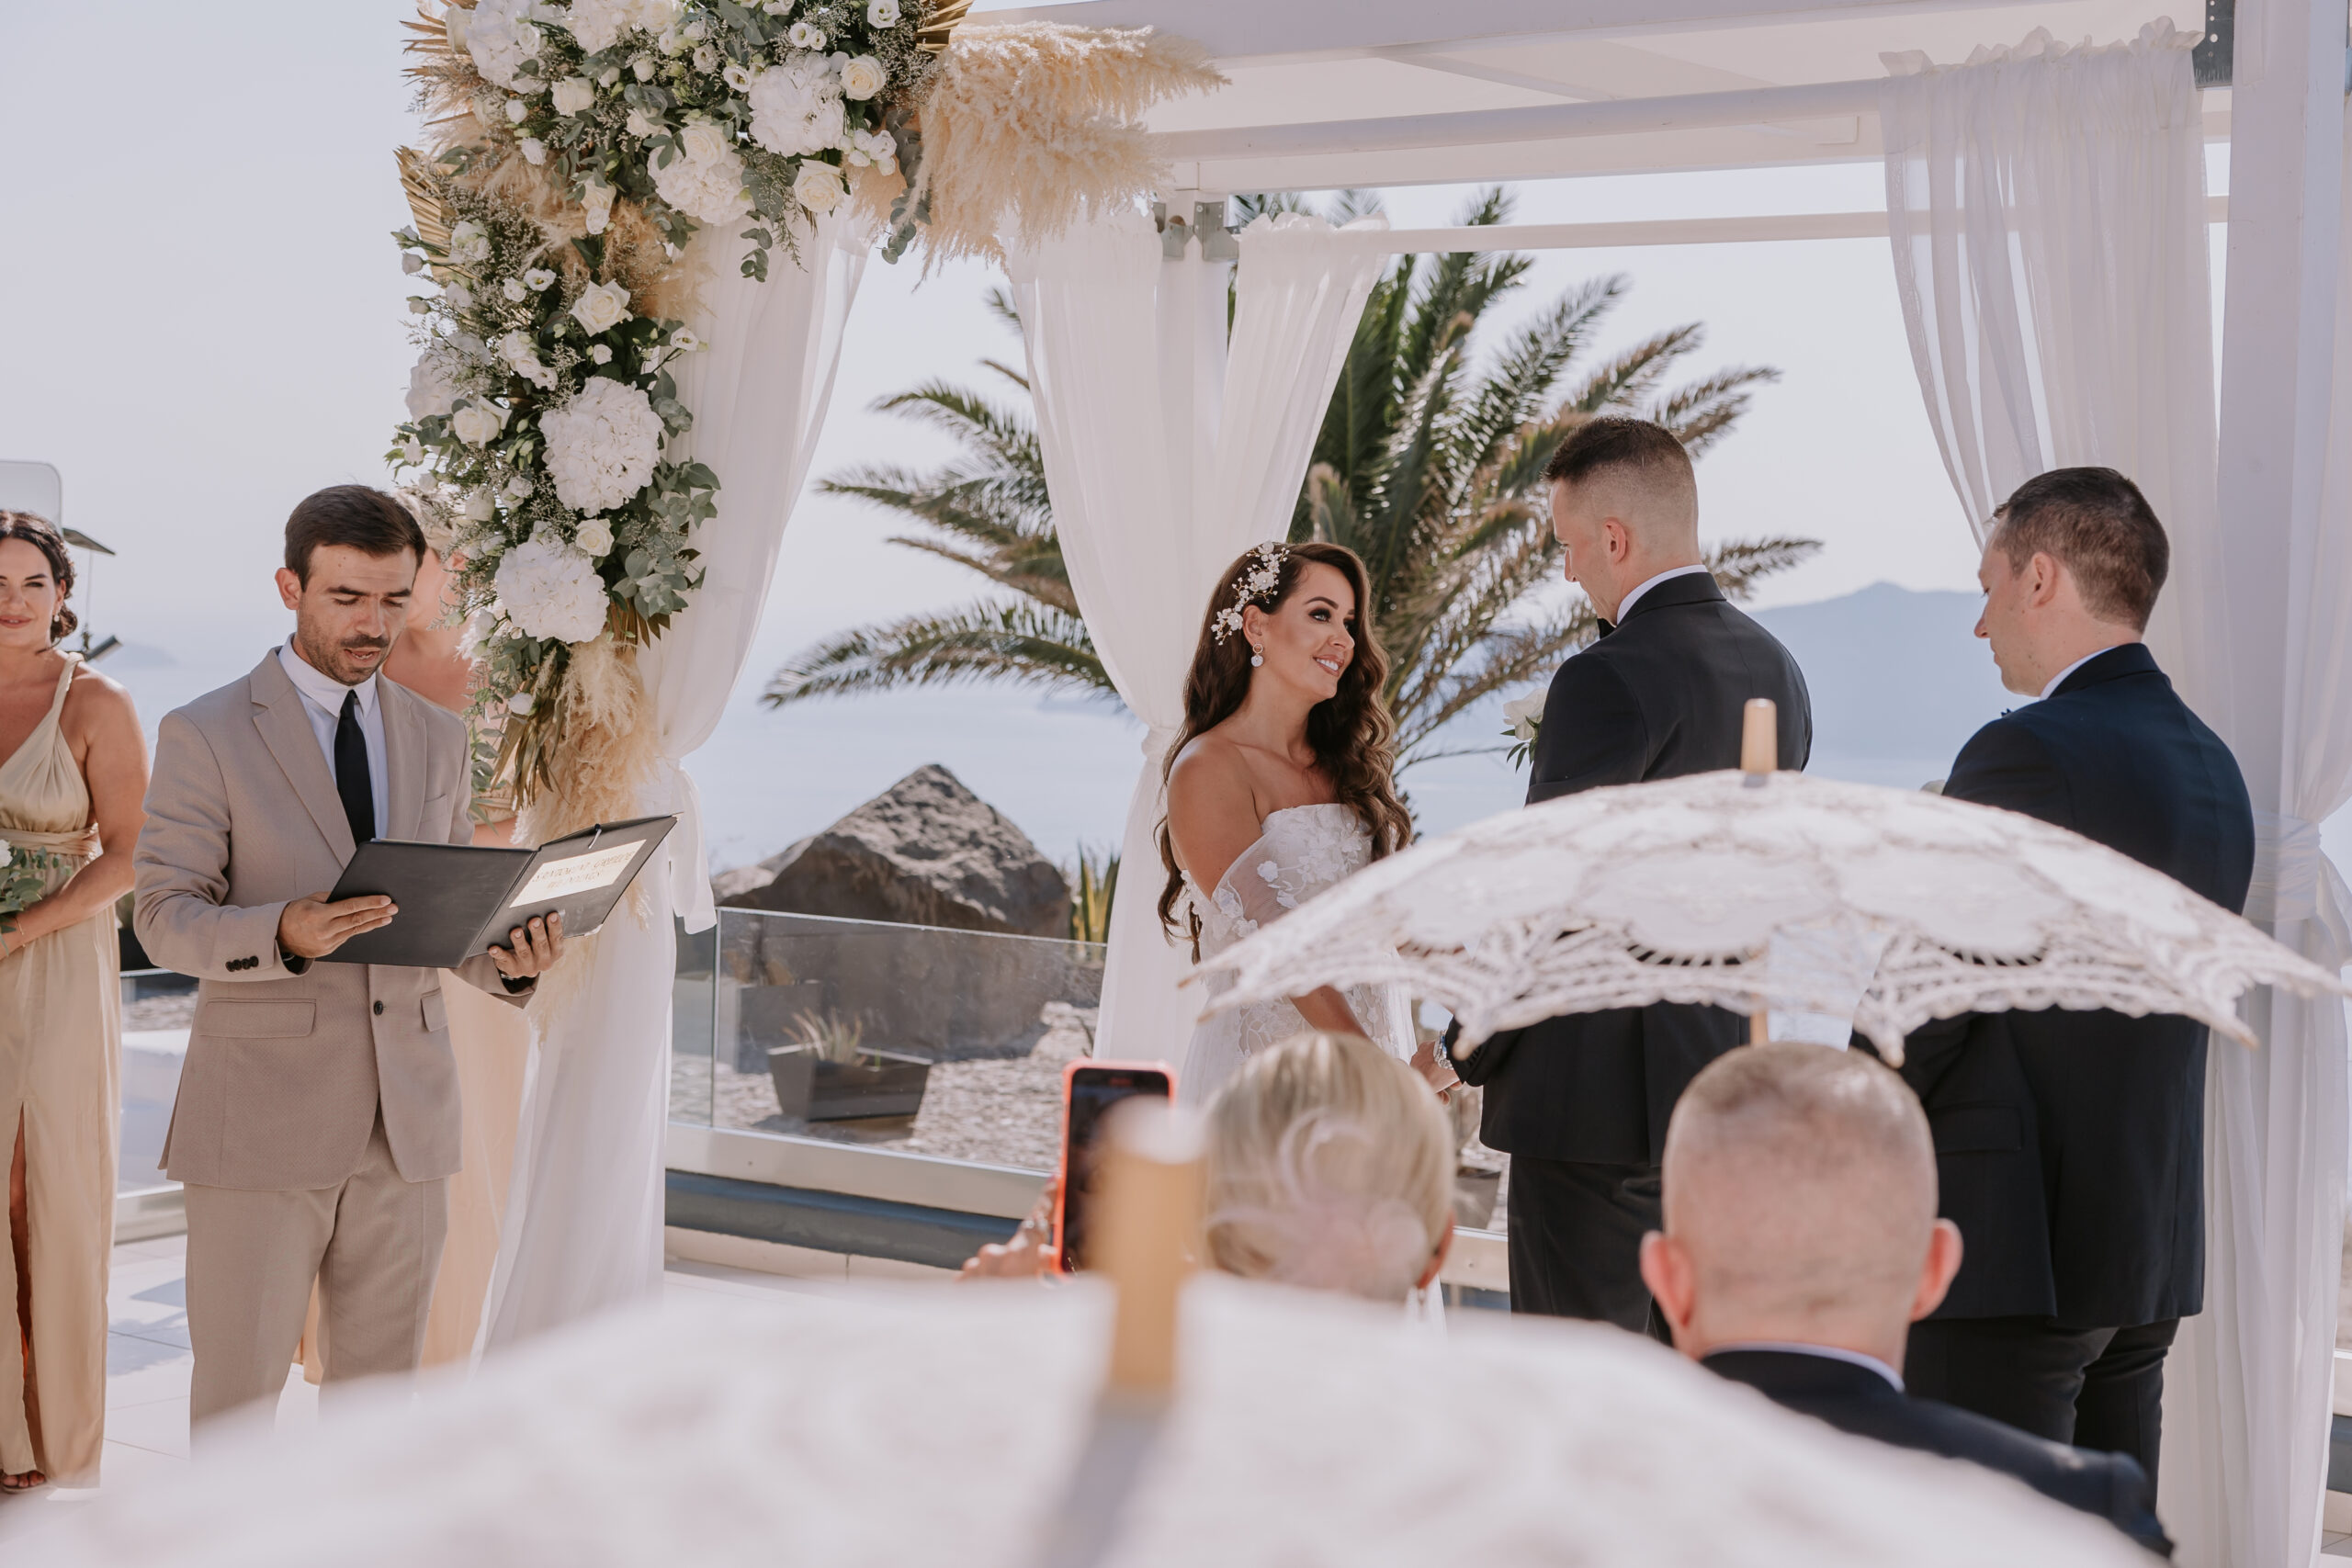 Santorini destination wedding ceremony at Le Ciel